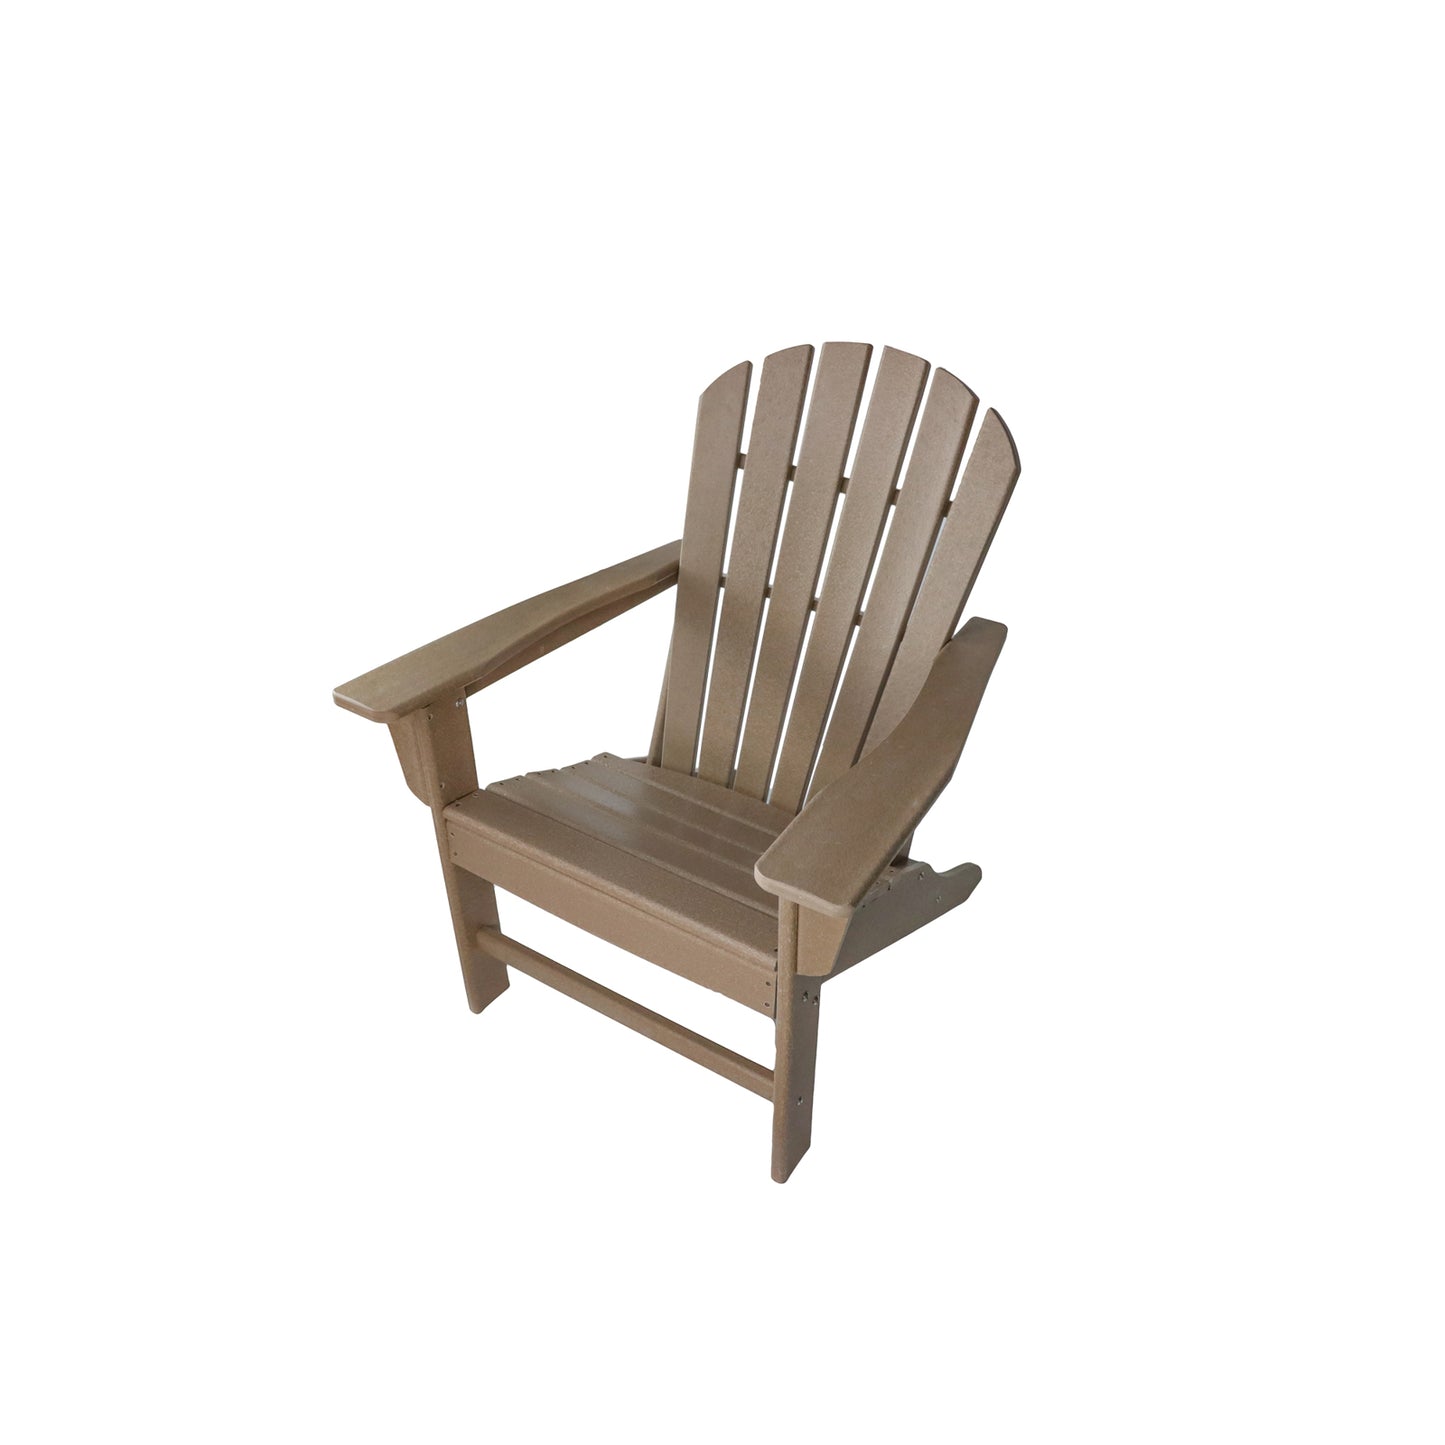 UM HDPE Resin Wood Adirondack Chair - Grey